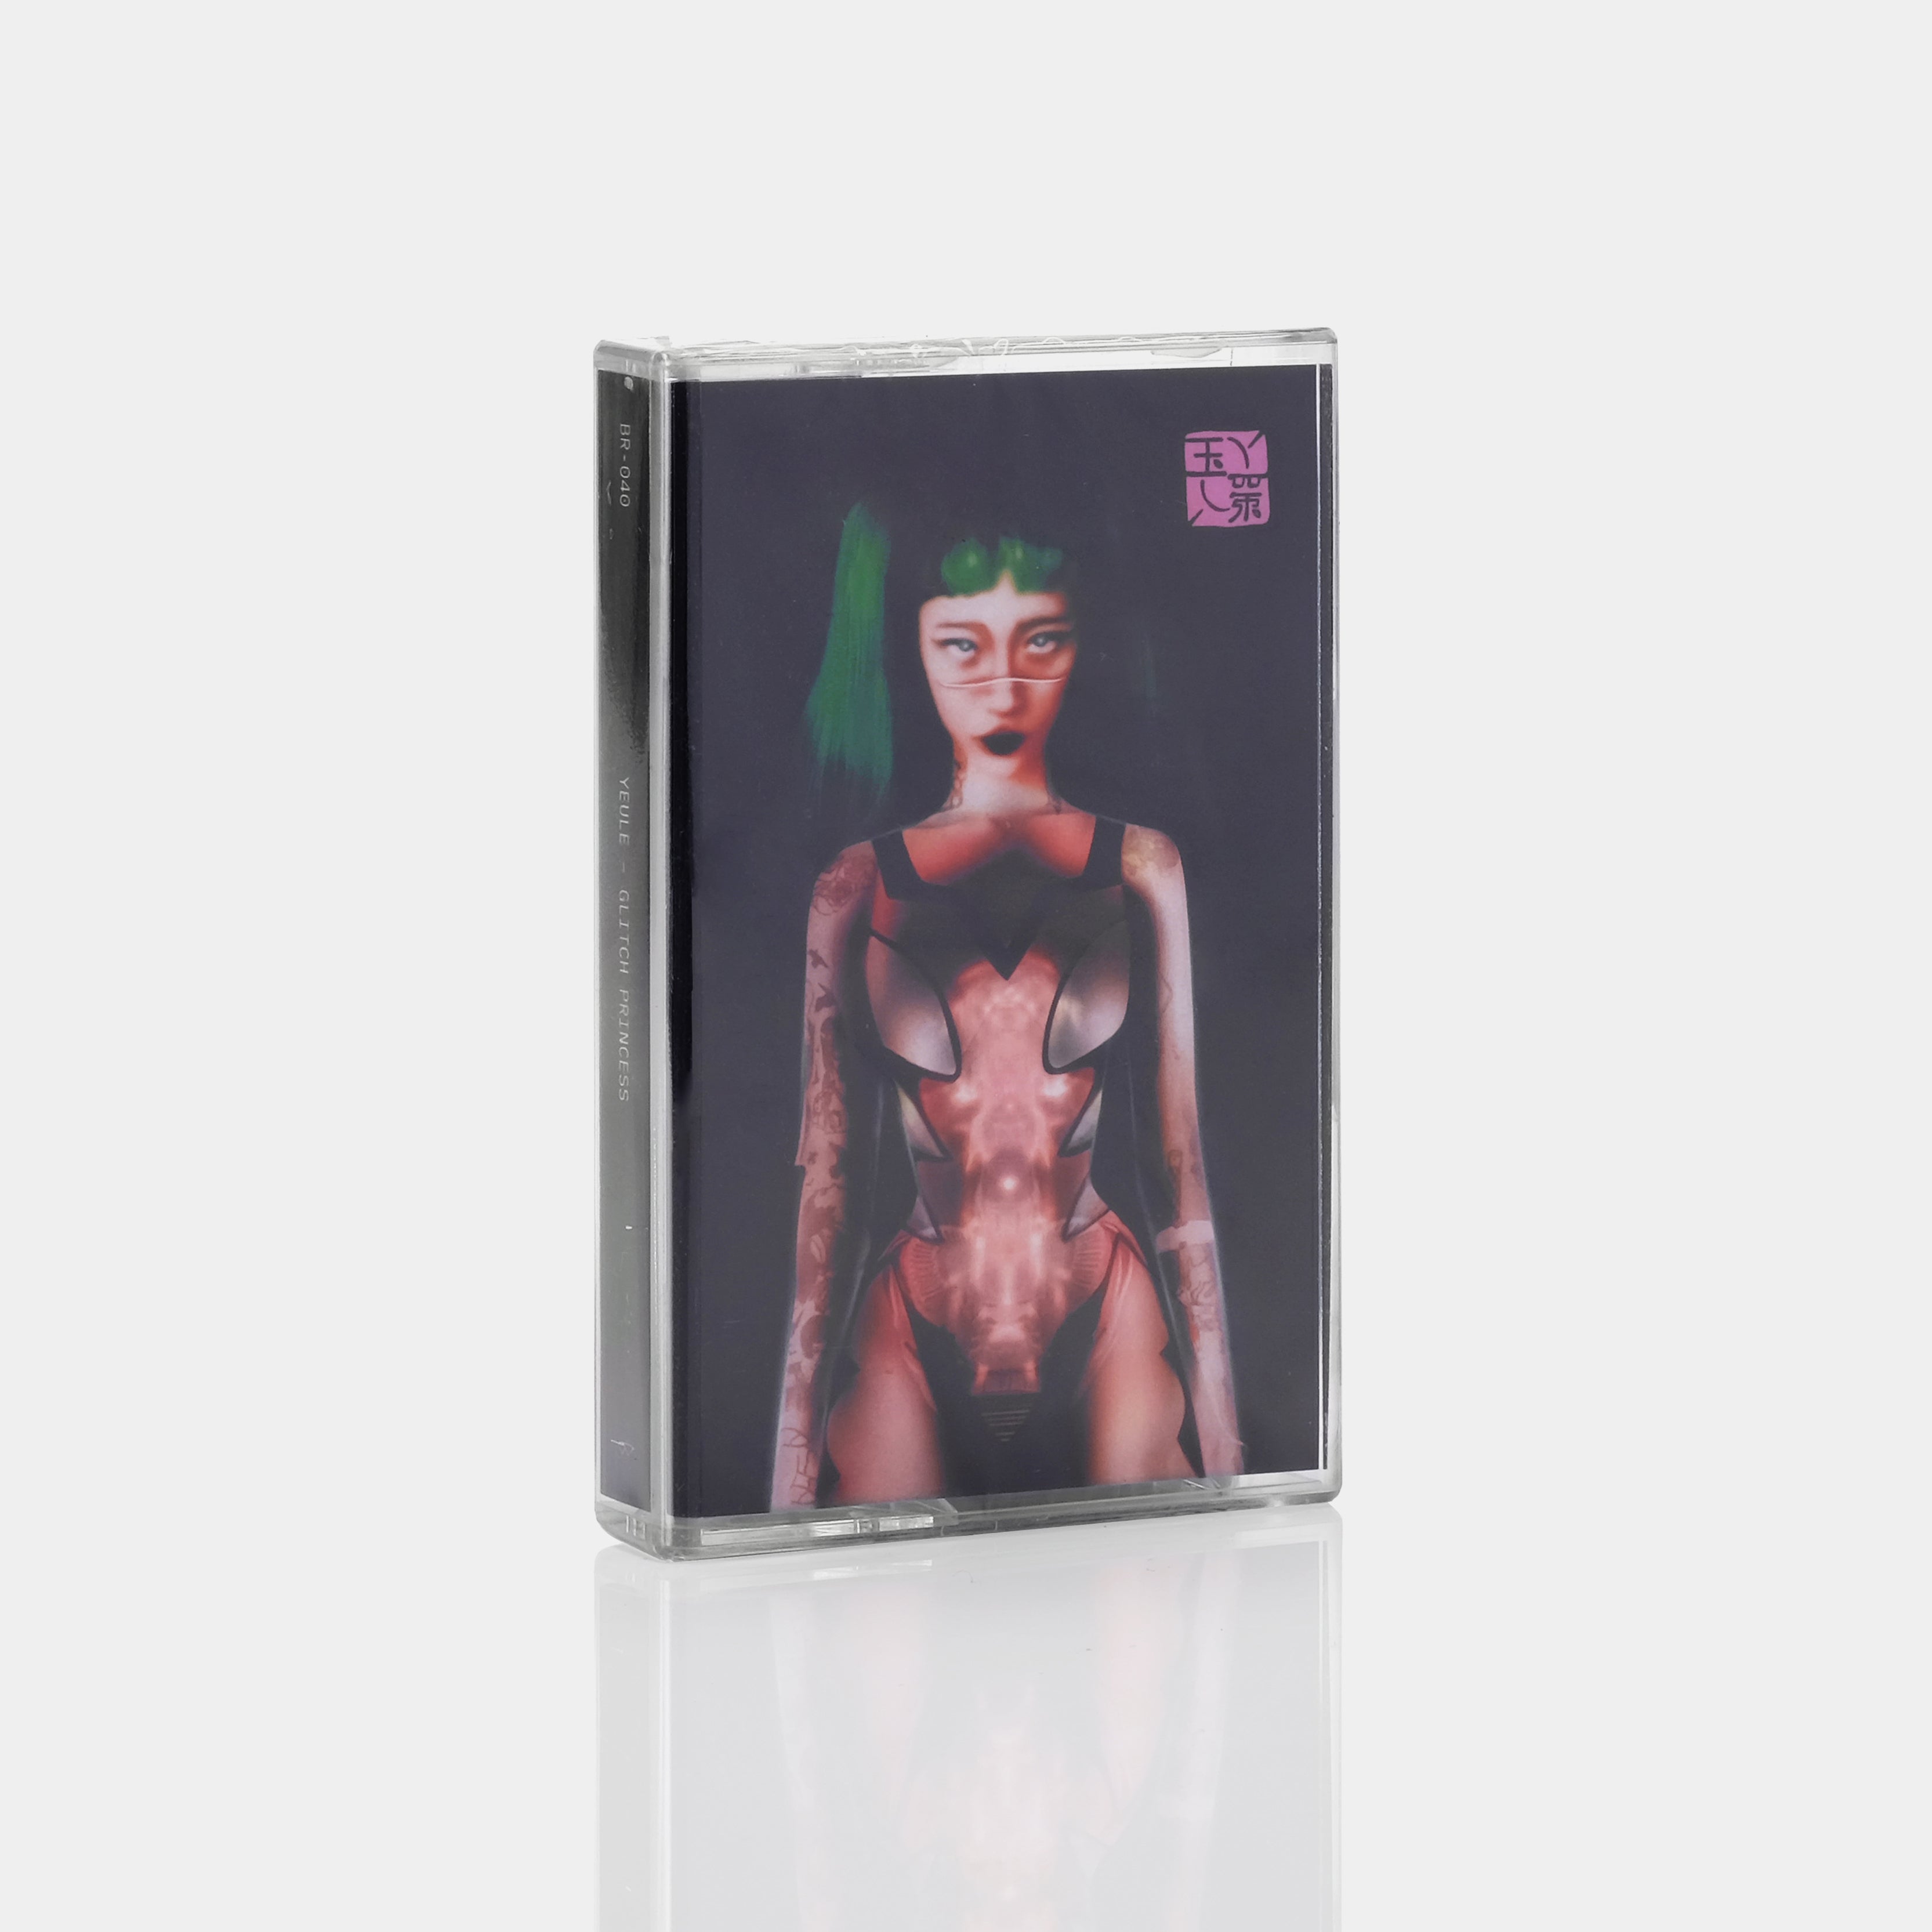 yeule - Glitch Princess Cassette Tape